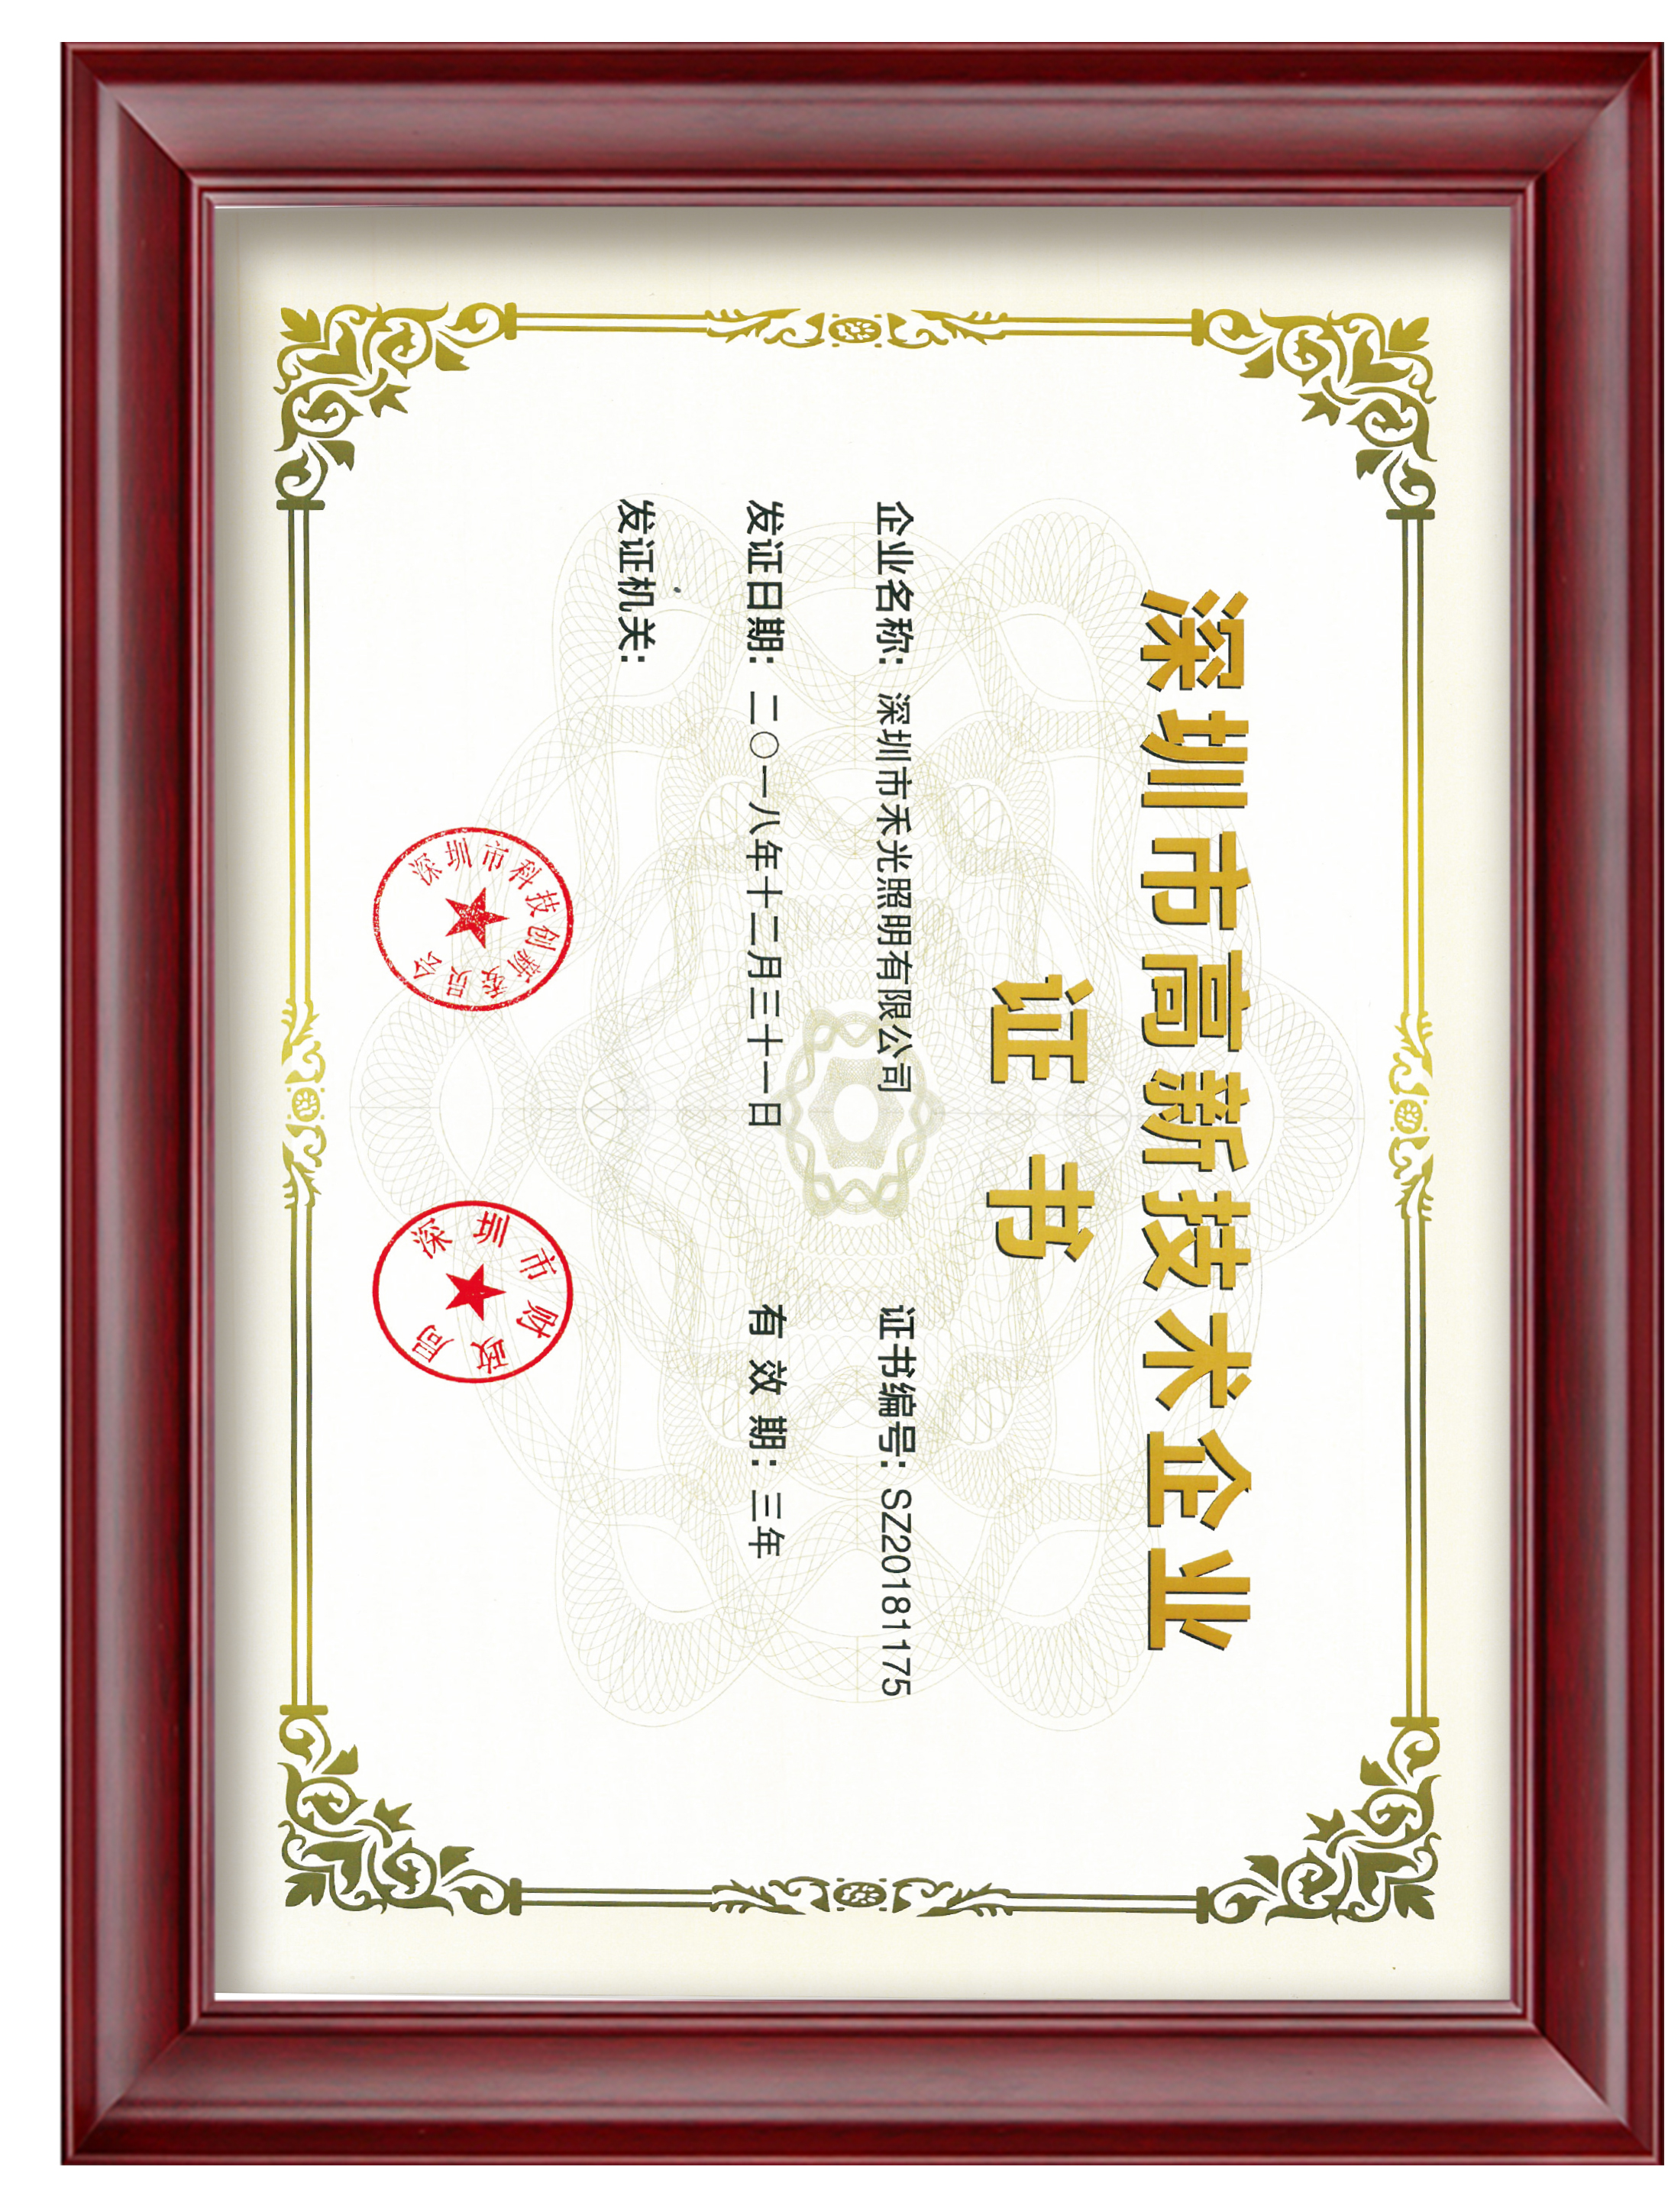 12. Certificado de empresa de alta tecnología de Shenzhen